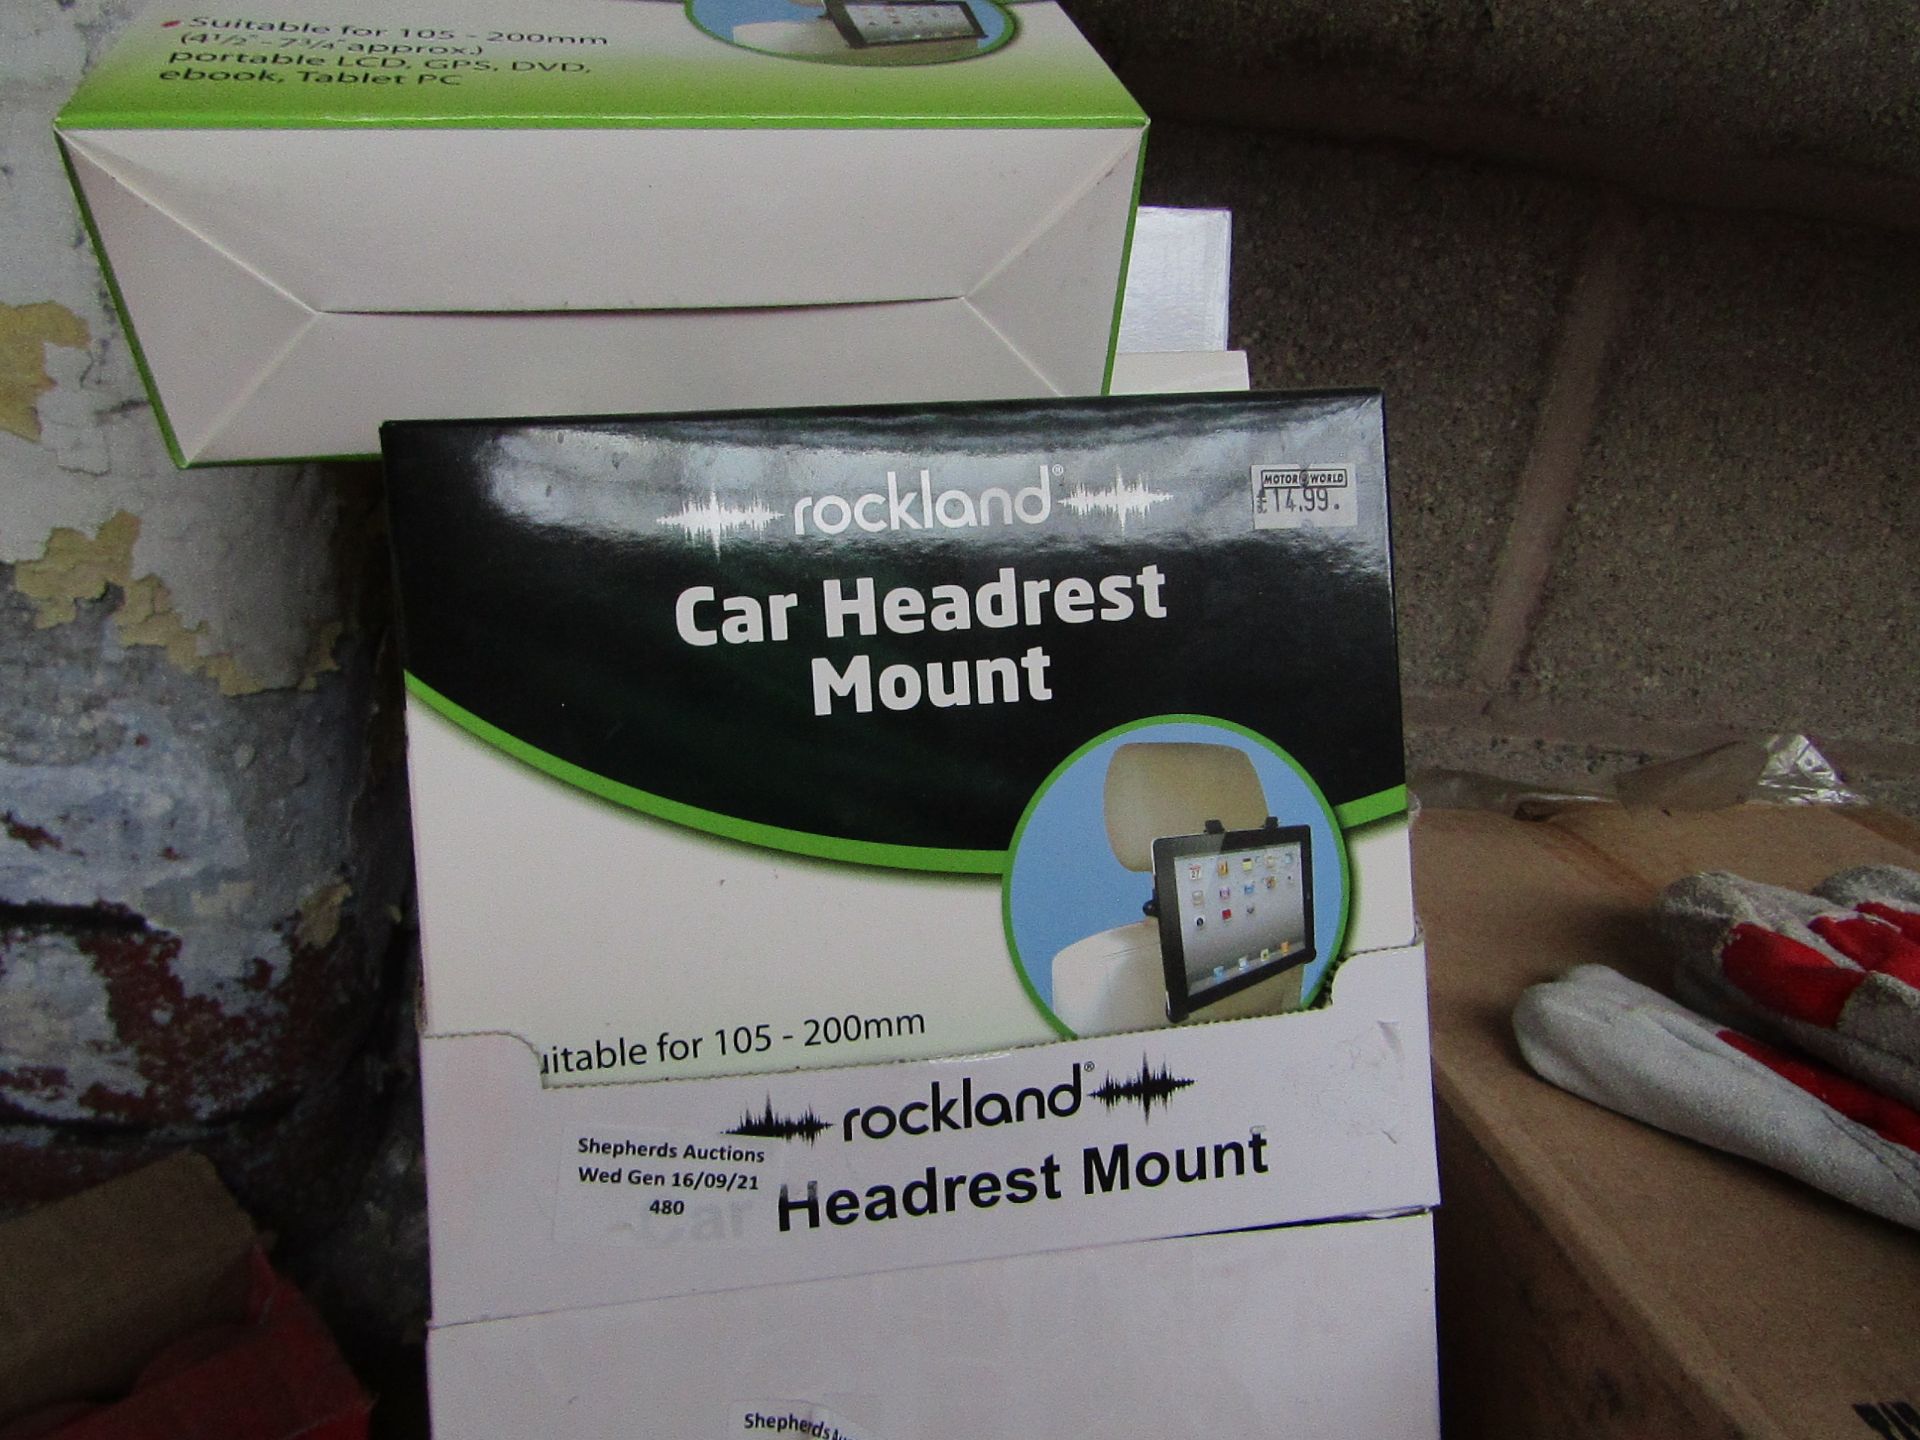 2x Box of 2x Car Headrest Mounts for Tablets, phones etc